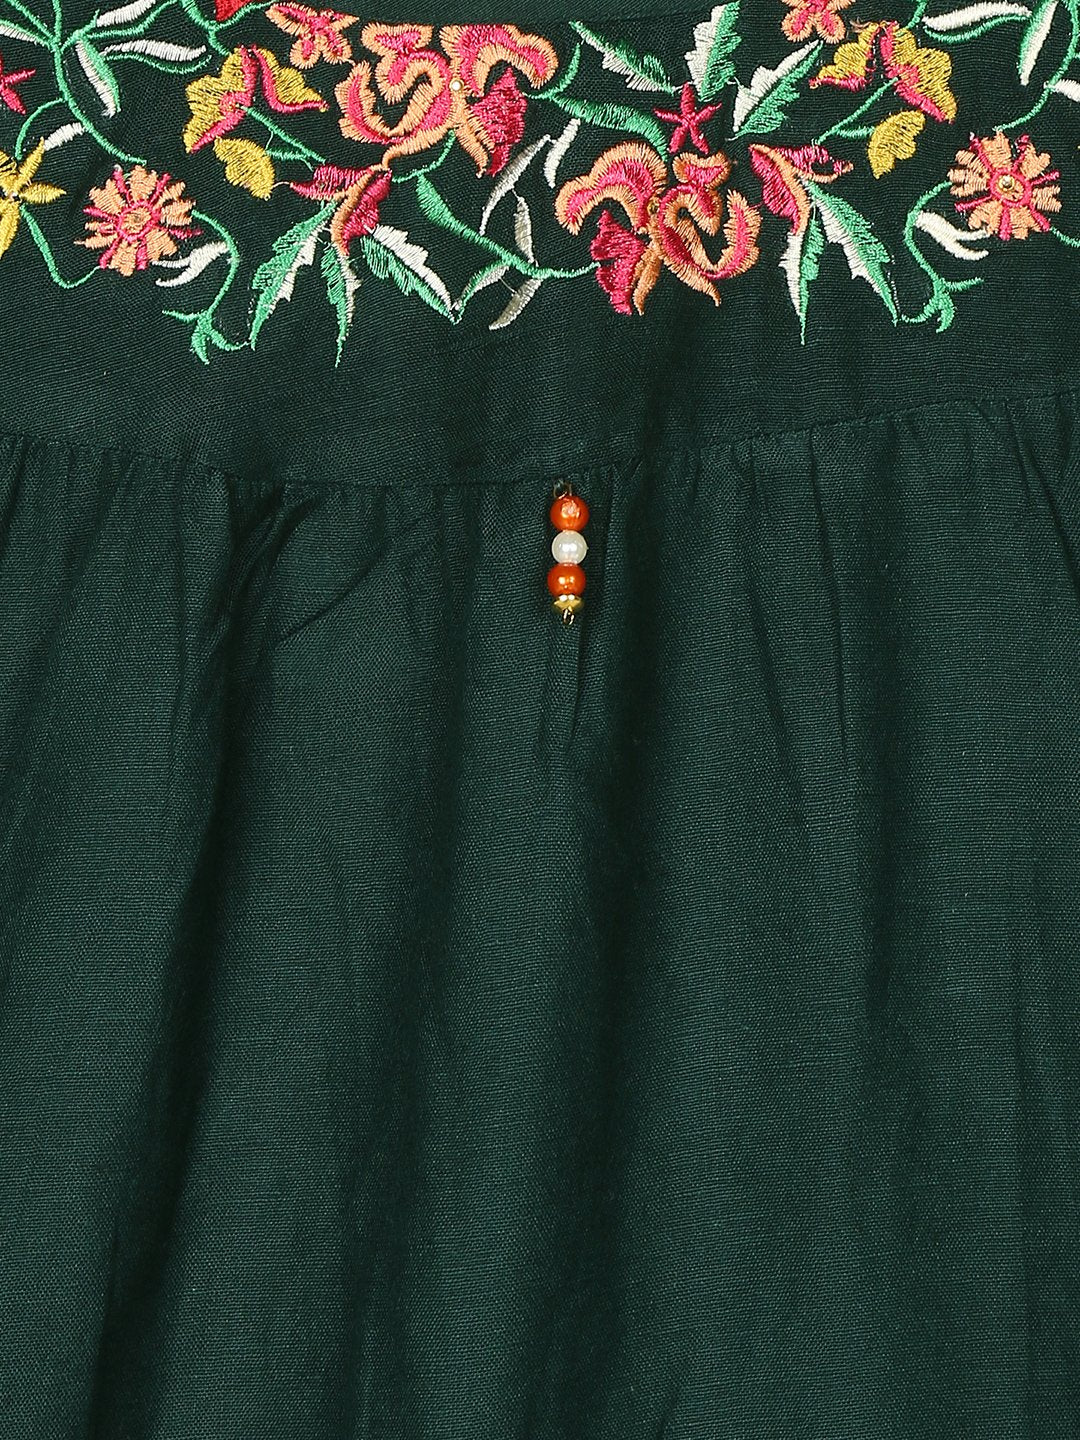 Ishin Girls Viscose Rayon Green Embroidered Top